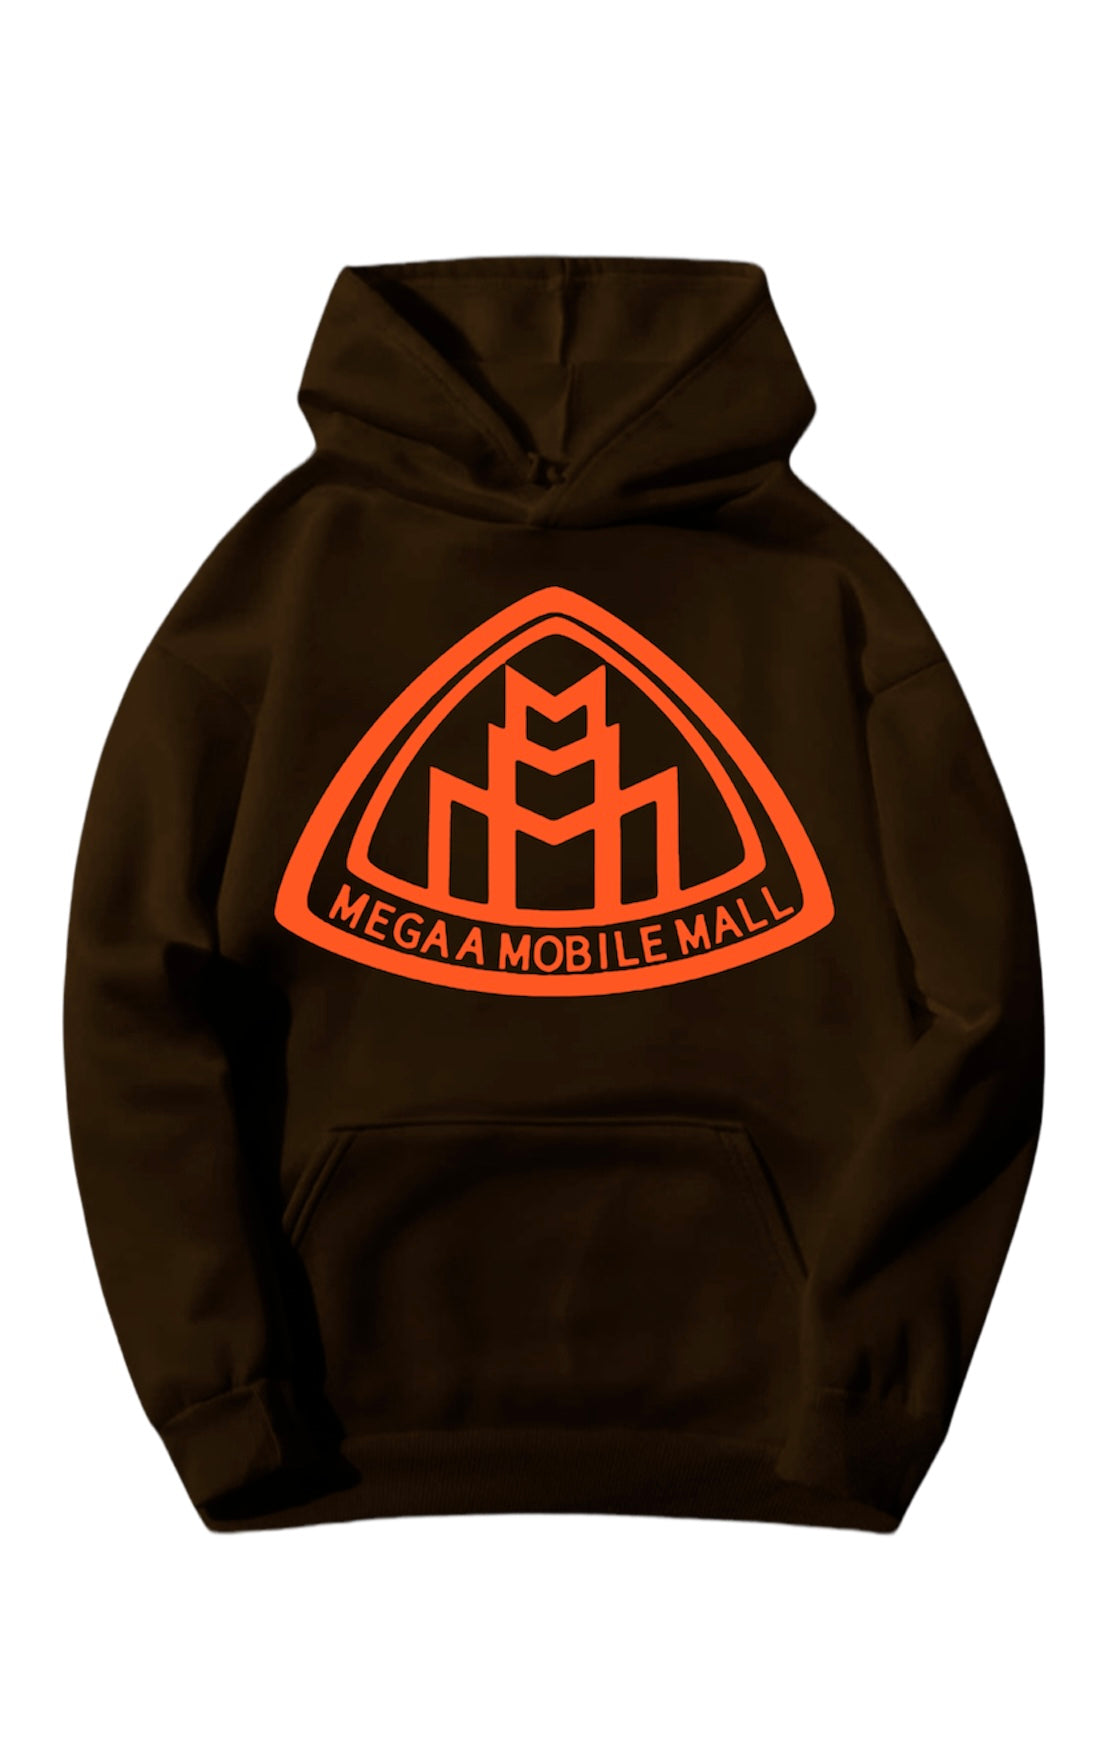 brown megaamobilemall logo Heavy Blend Fleece Hoodie with orange logo